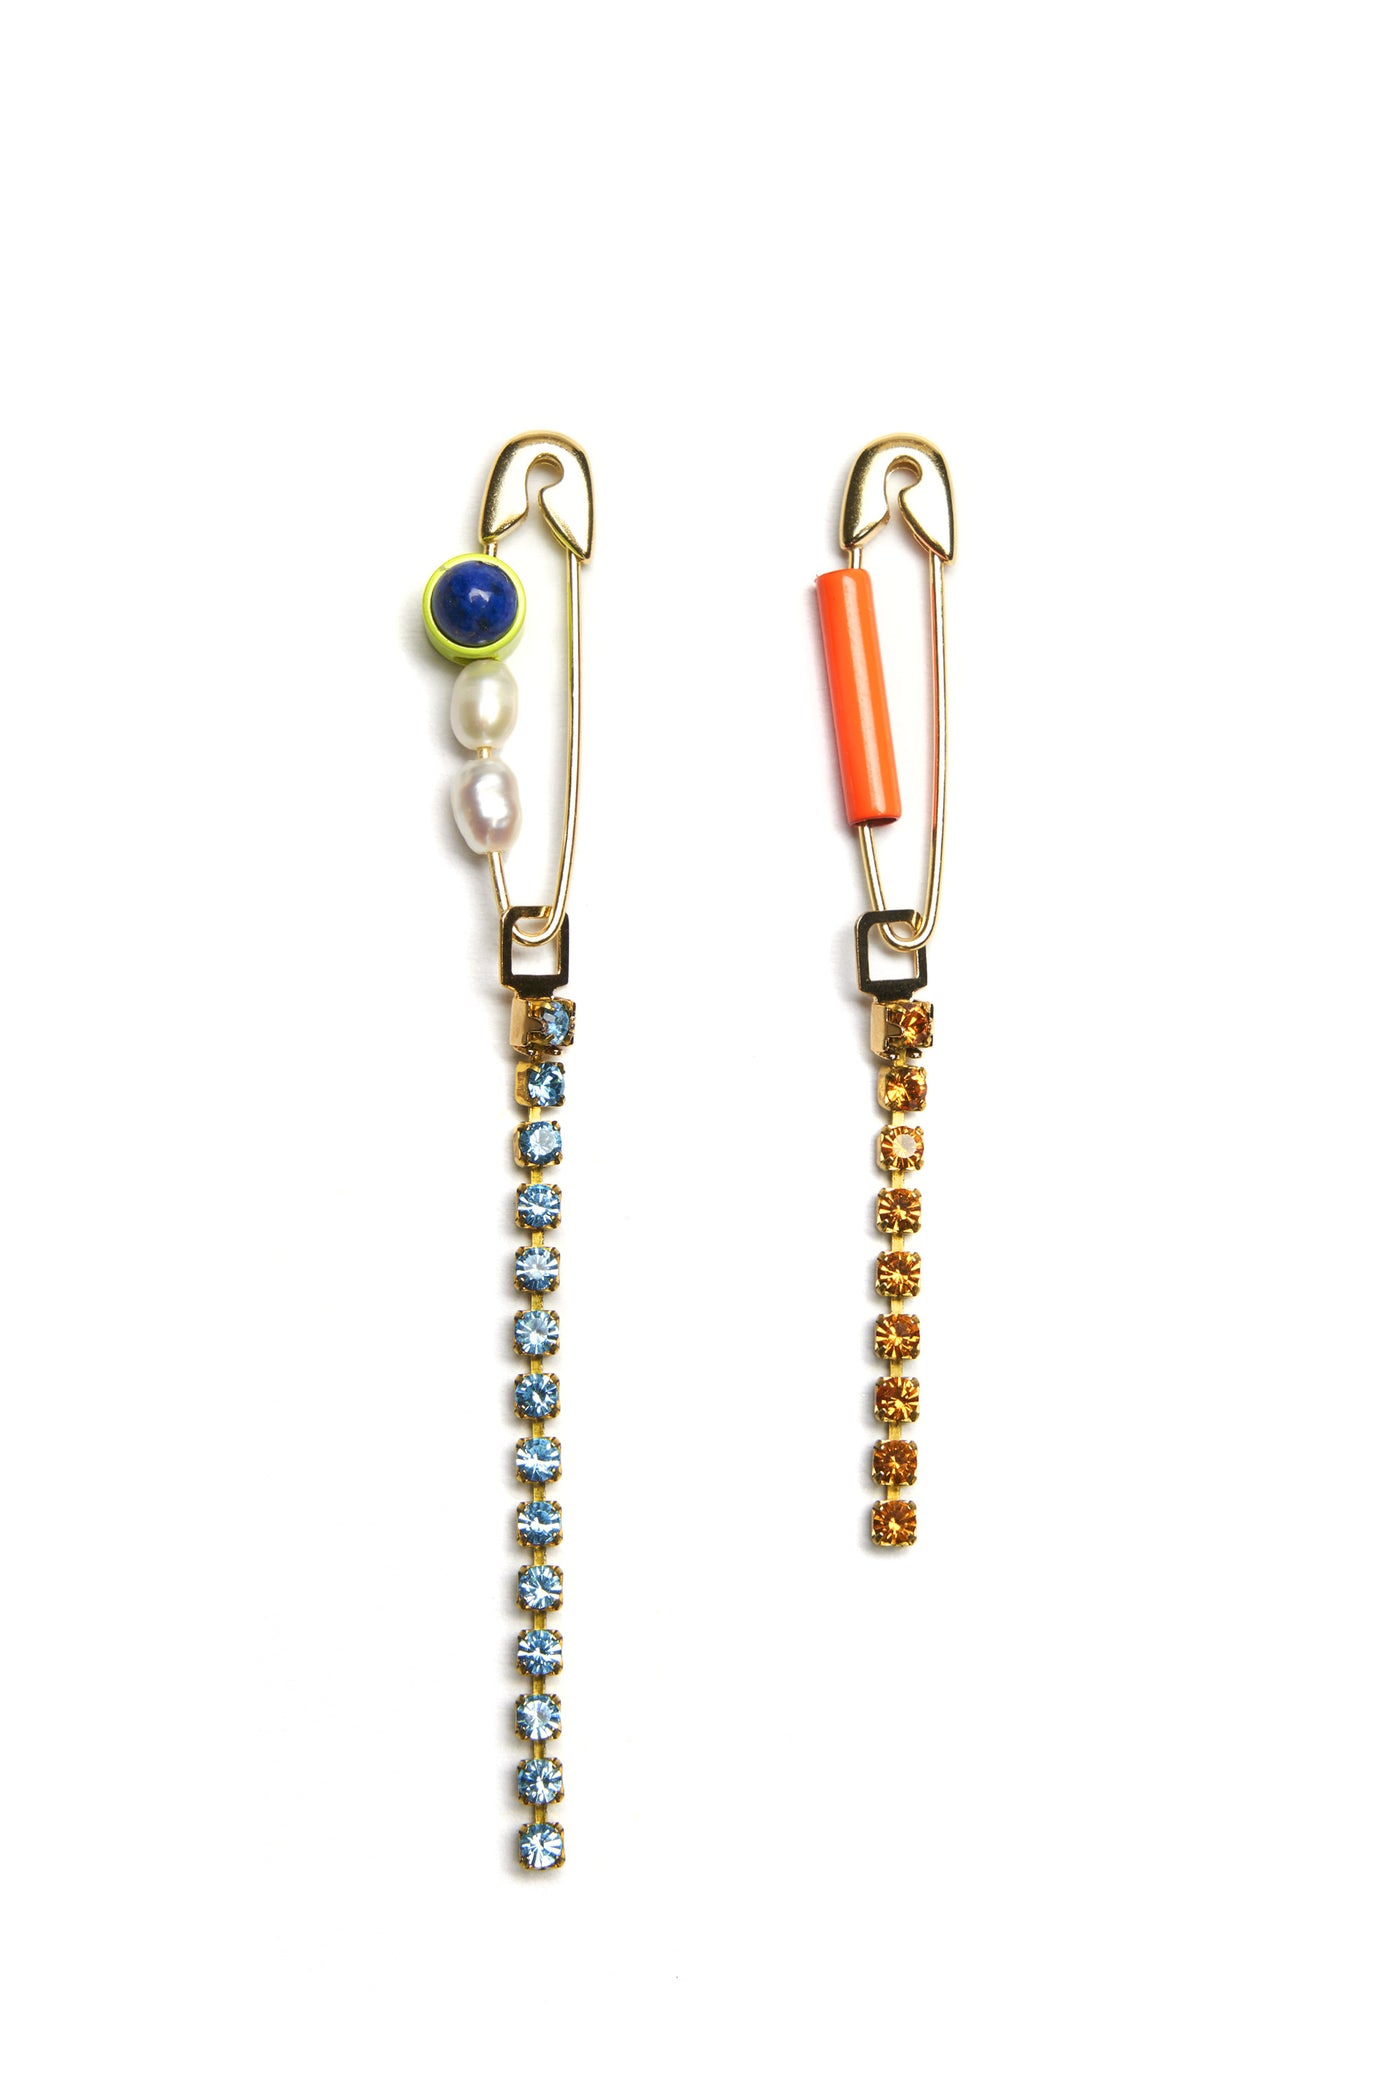 Bianca Mavrick Jewellery with Safety Pin Earrings Gold Lapis Lazuli Rhinestone Chain